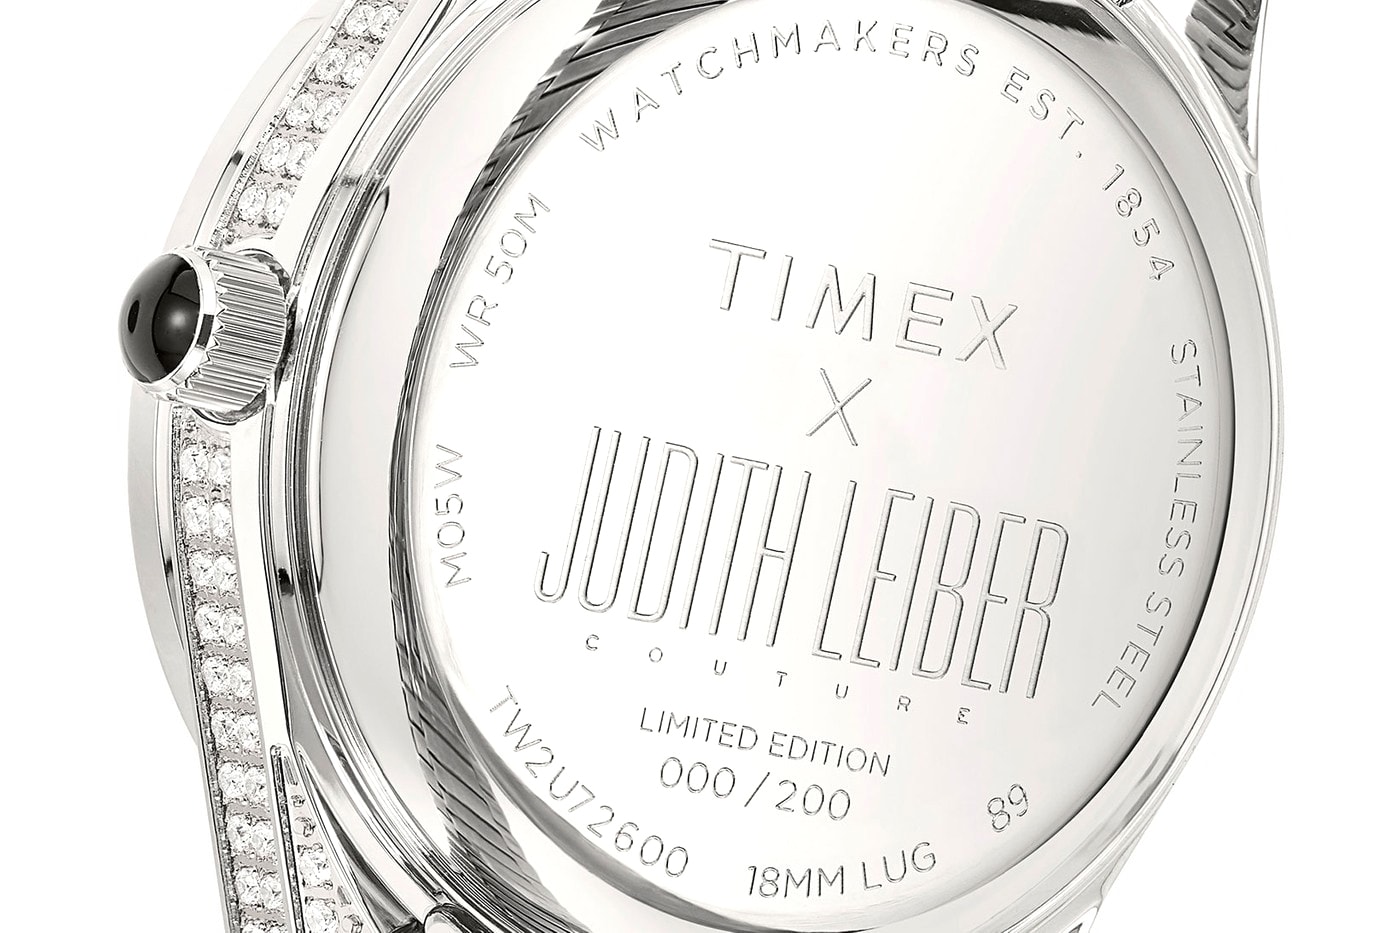 Judith Leiber x Timex Swarovski Crystal Collaboration Q Timex T80 Watch Rainbow Digital Watches Timepieces Bussdown 